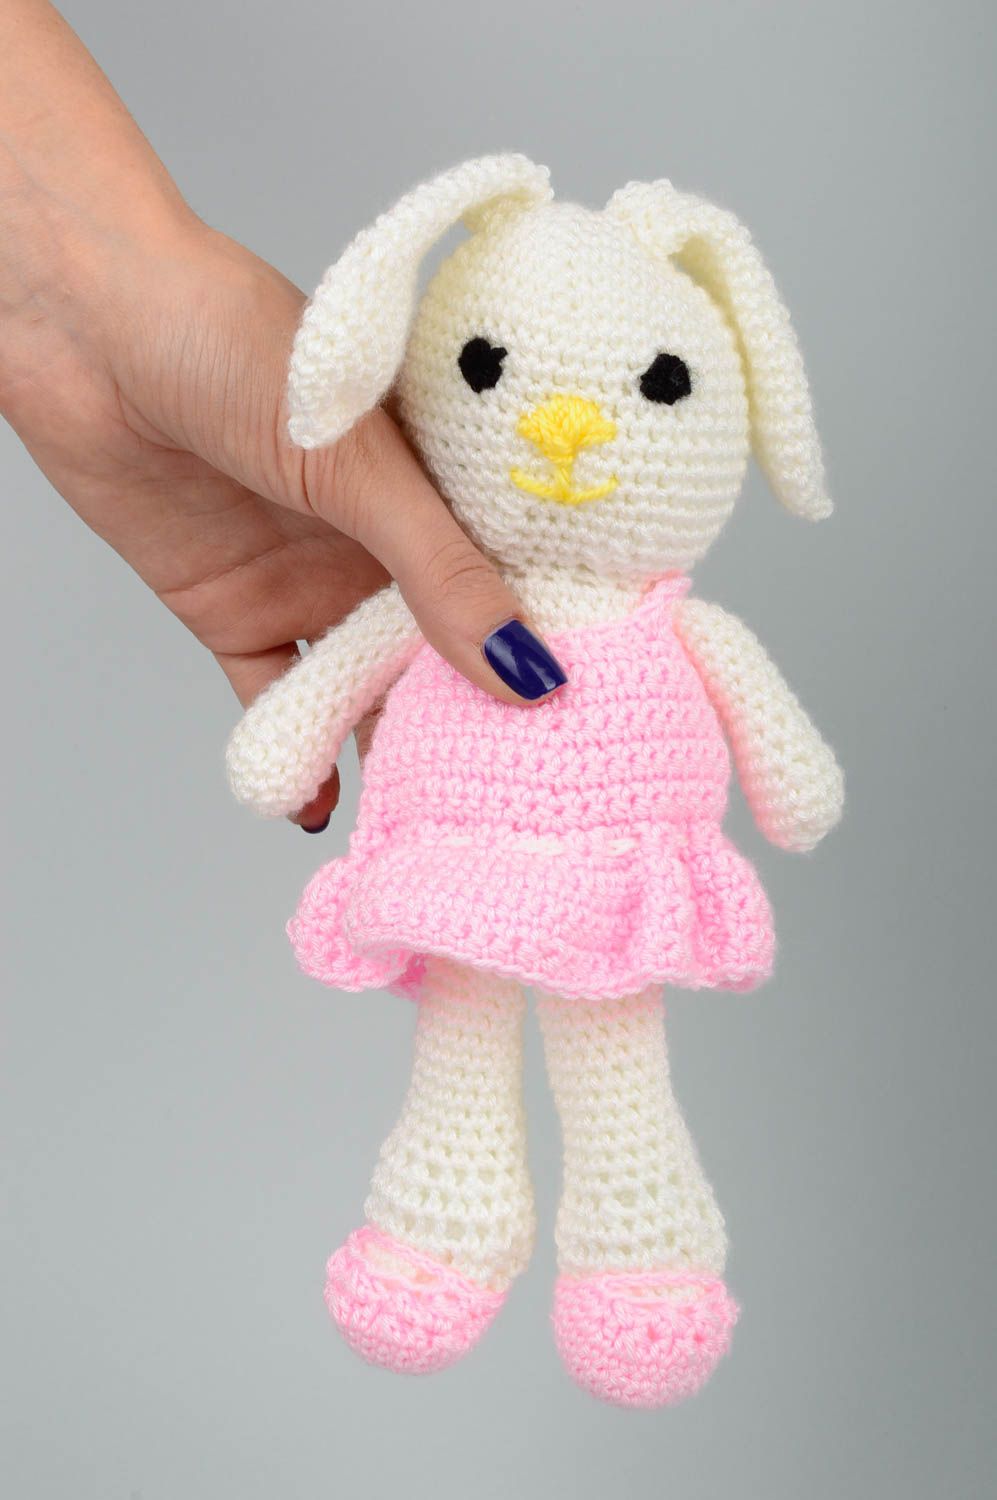 Beautiful handmade crochet soft toy childrens toys nursery design gift ideas photo 2